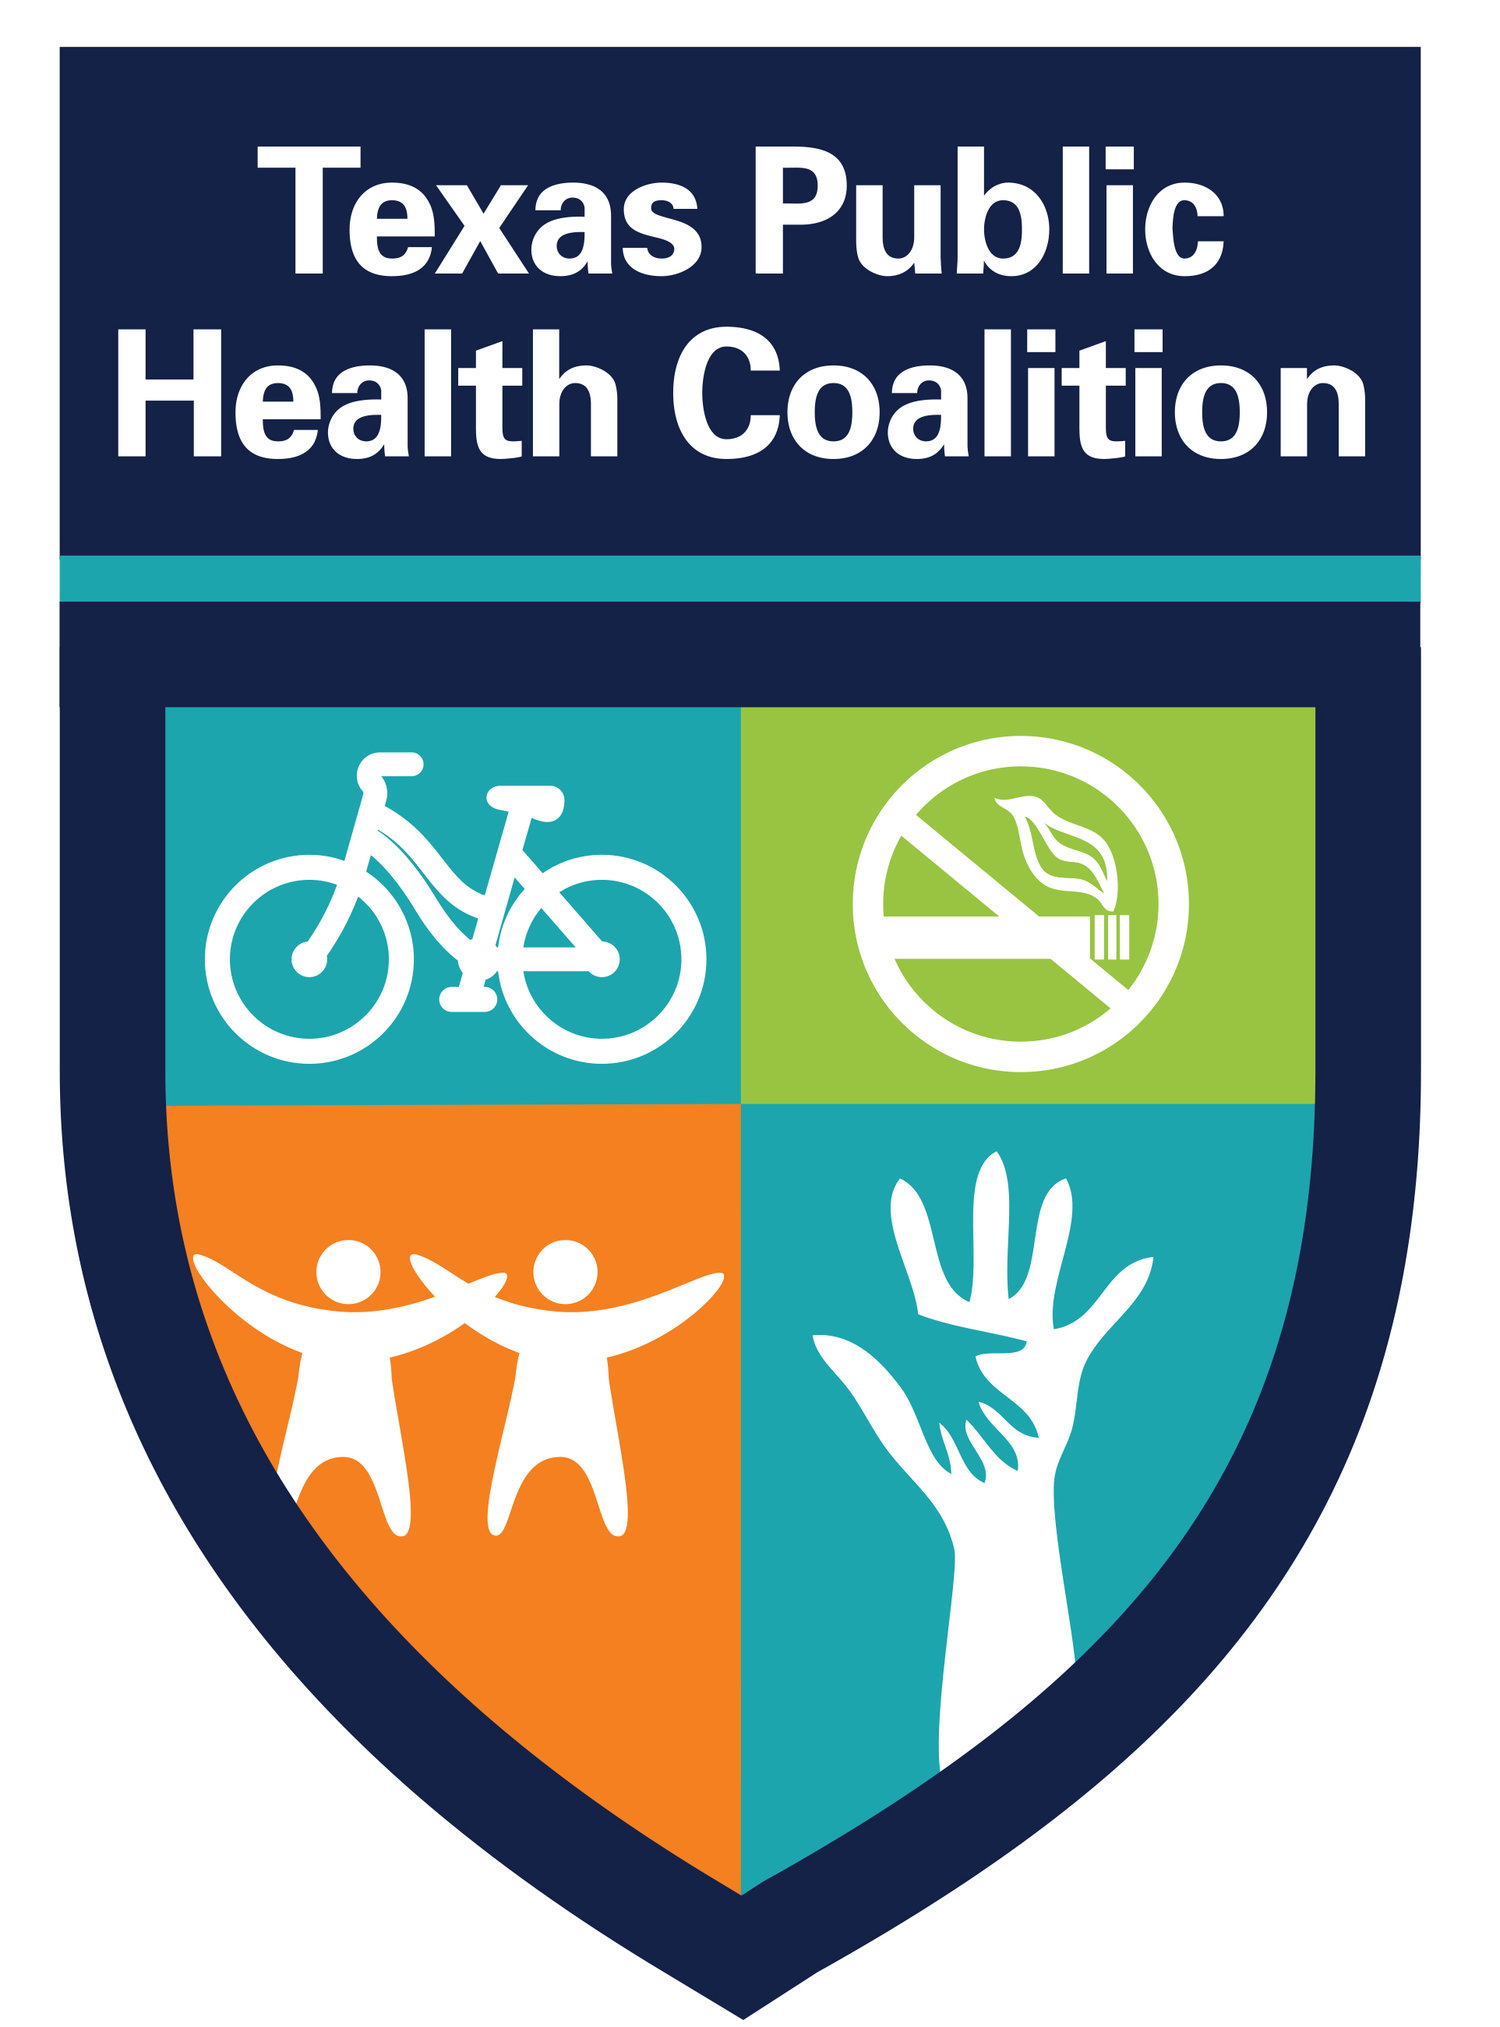 Texas Public Health Coalition